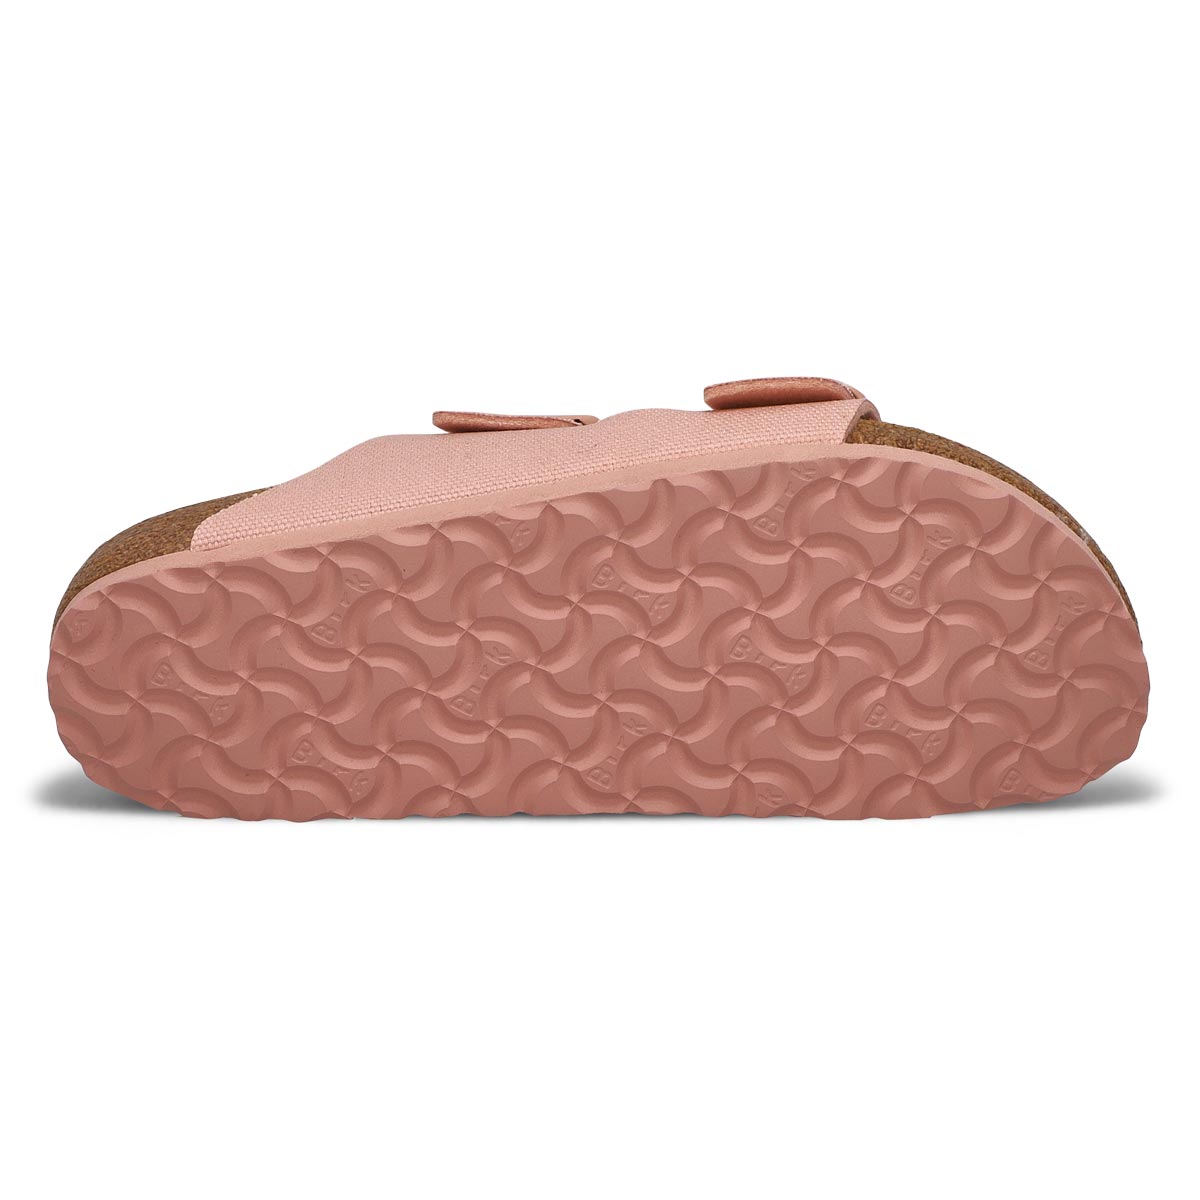 Women's Arizona Vegan NARROW Sandal - Soft Pink